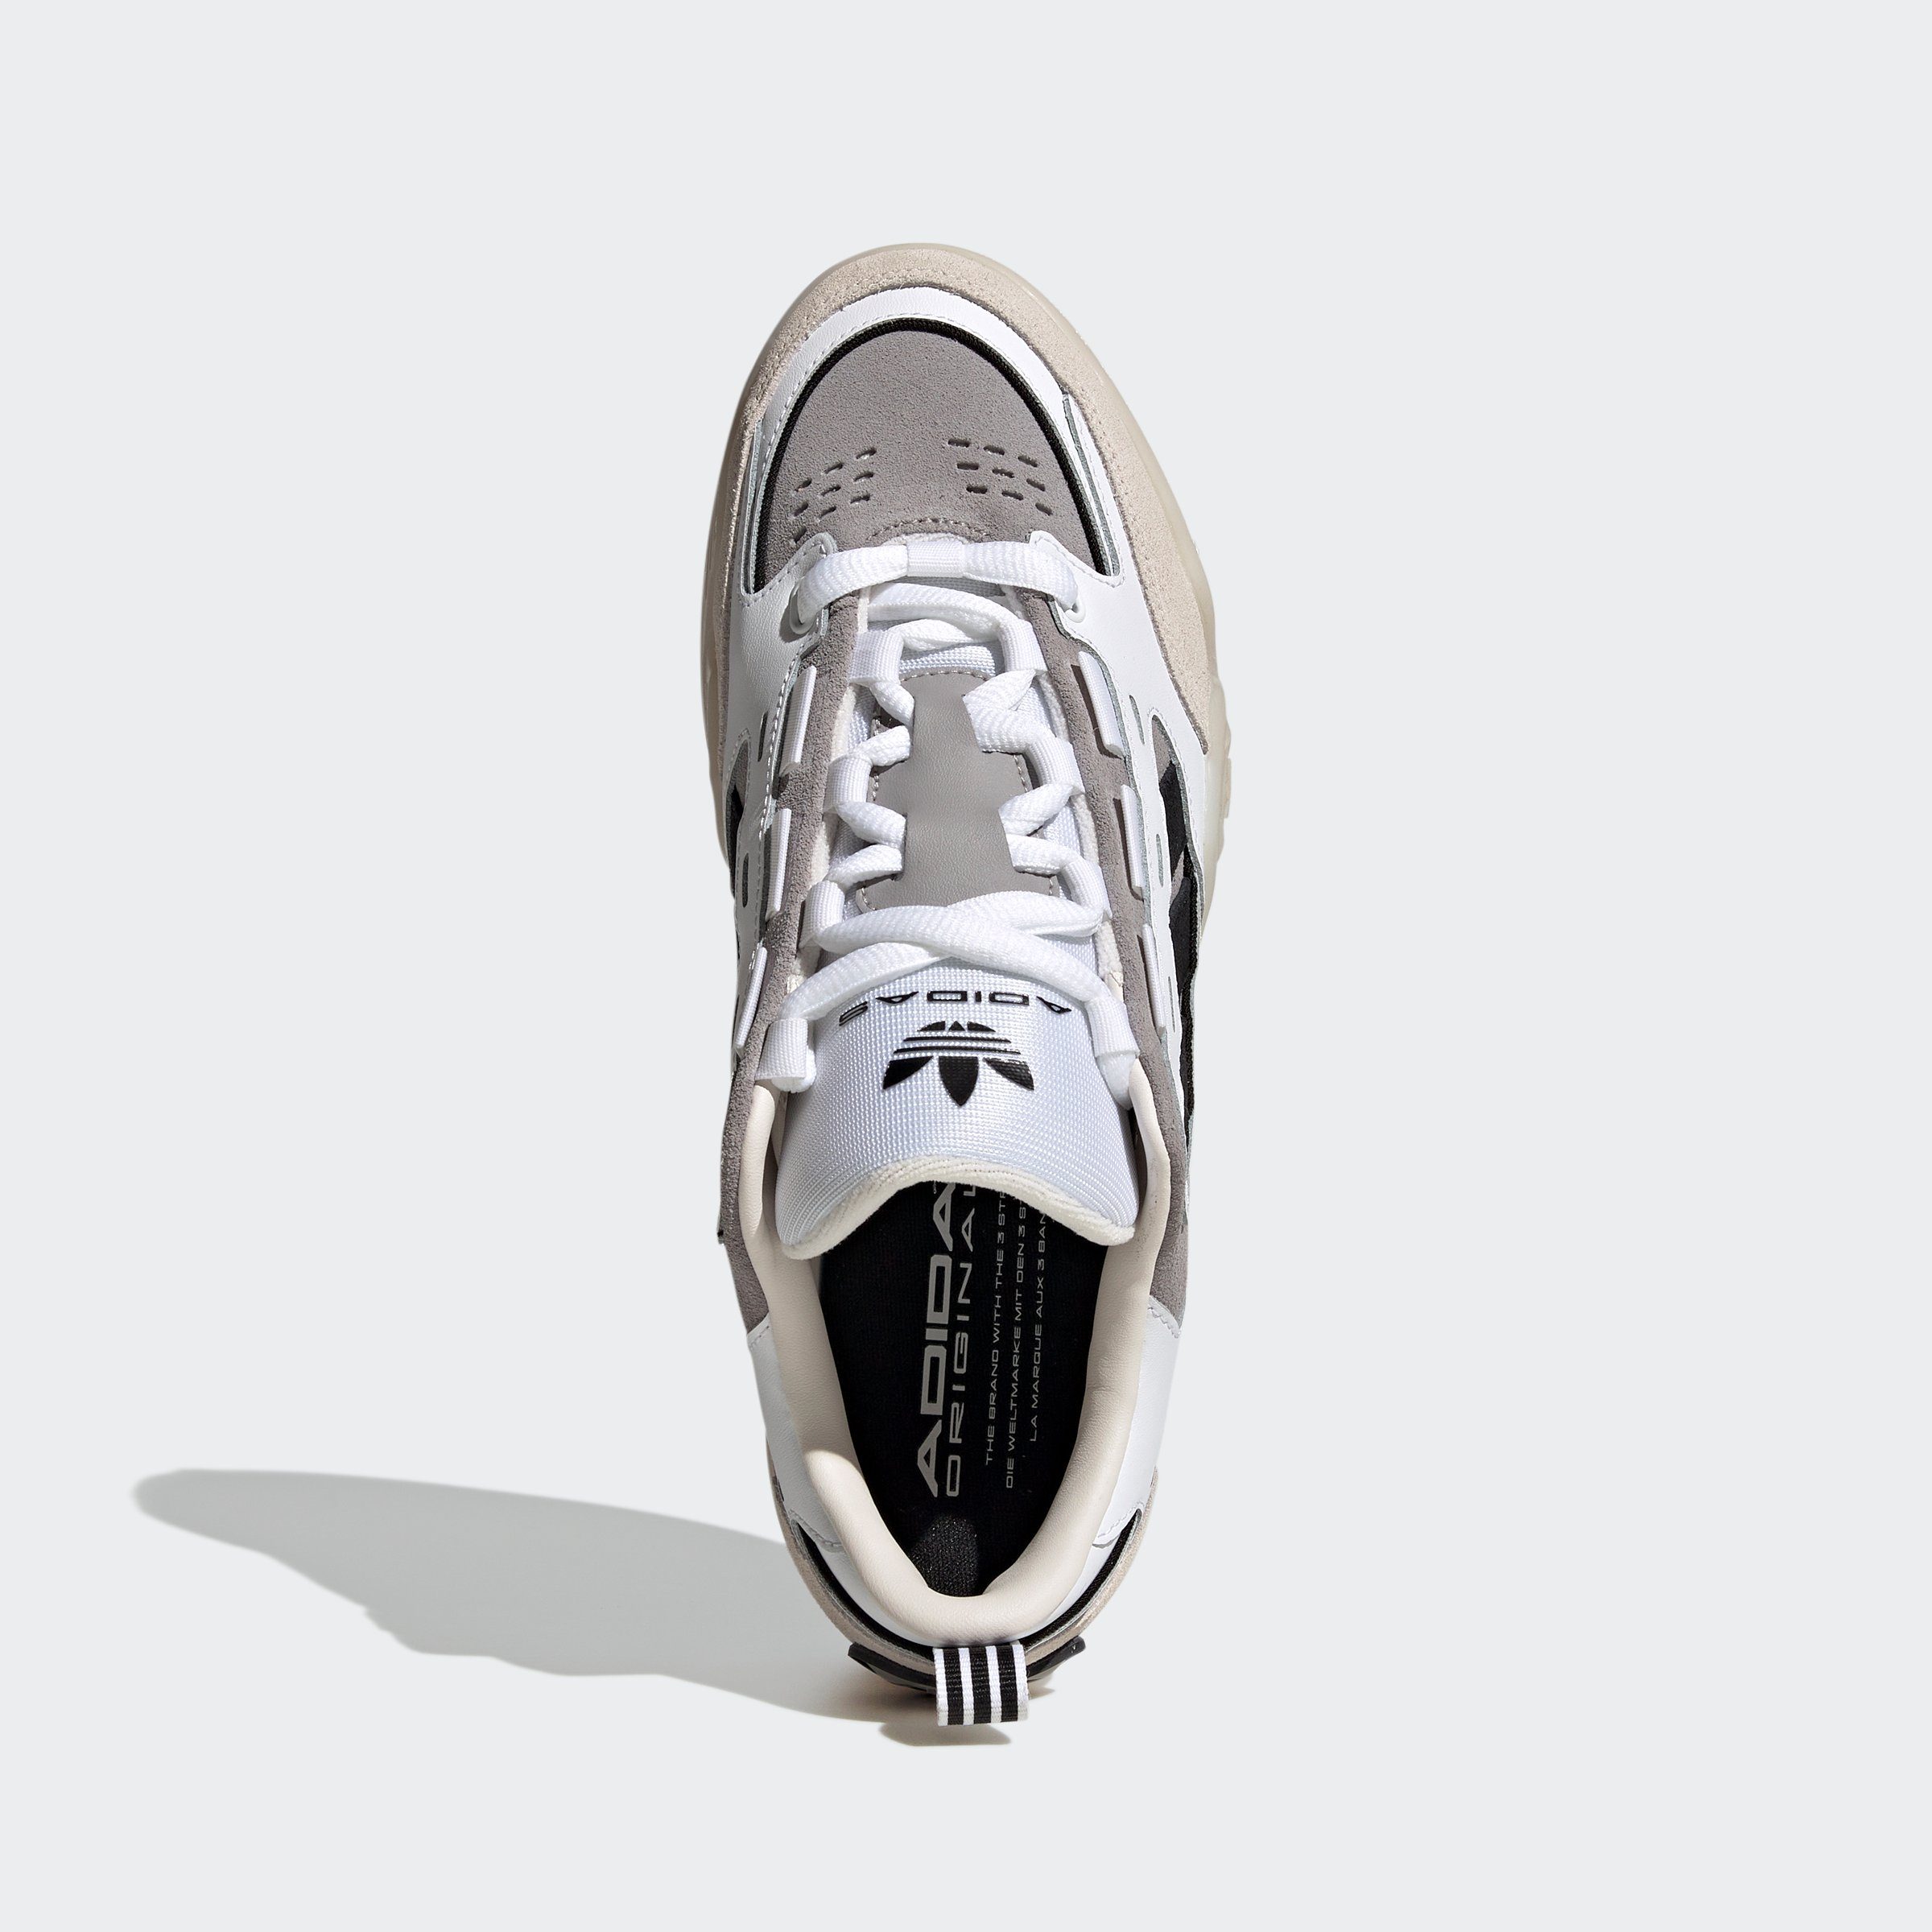 ADI2000 White Chalk Sneaker / Core Black adidas / White Cloud Originals